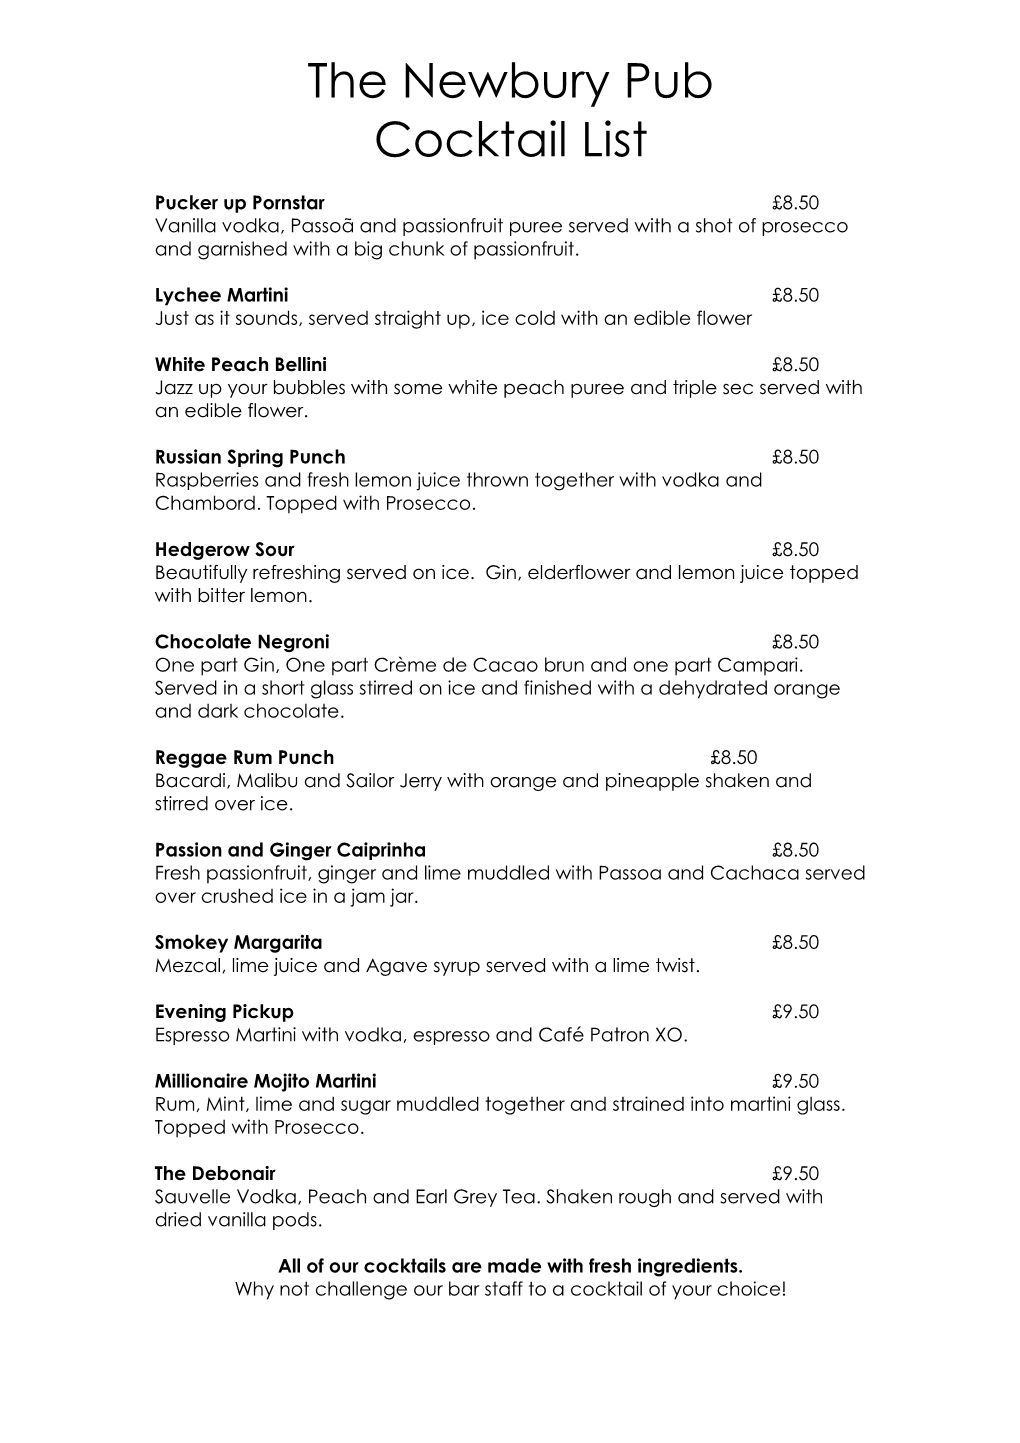 The Newbury Pub Cocktail List